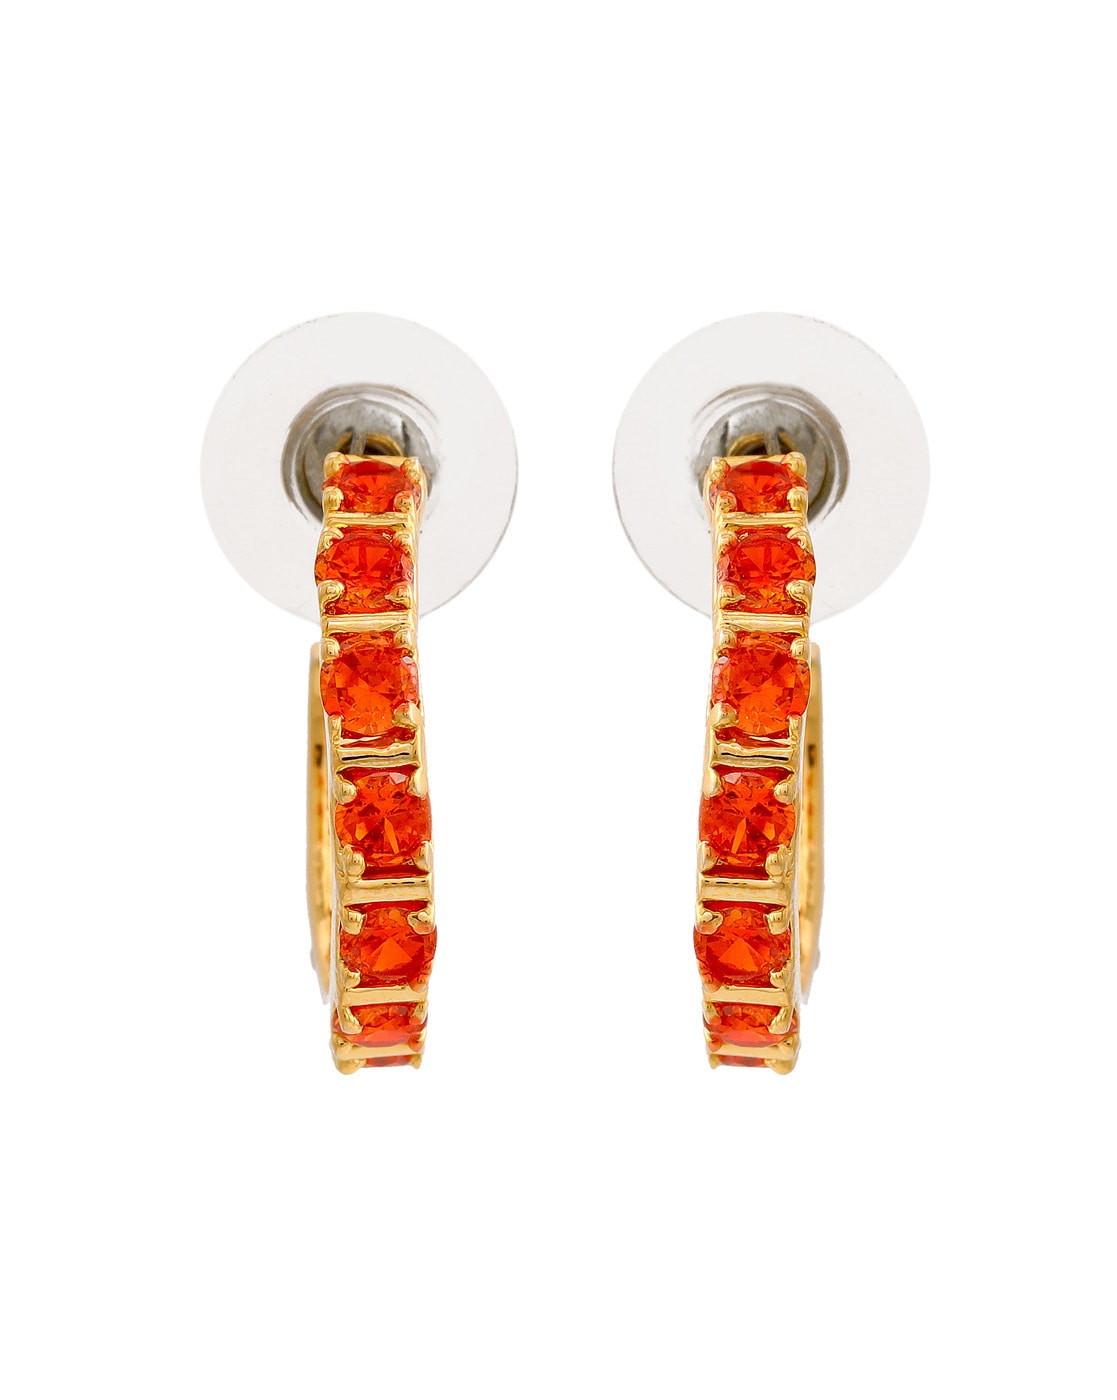 Shop Rubans Gold Toned CZ Stone Hoop Earrings Online at Rubans